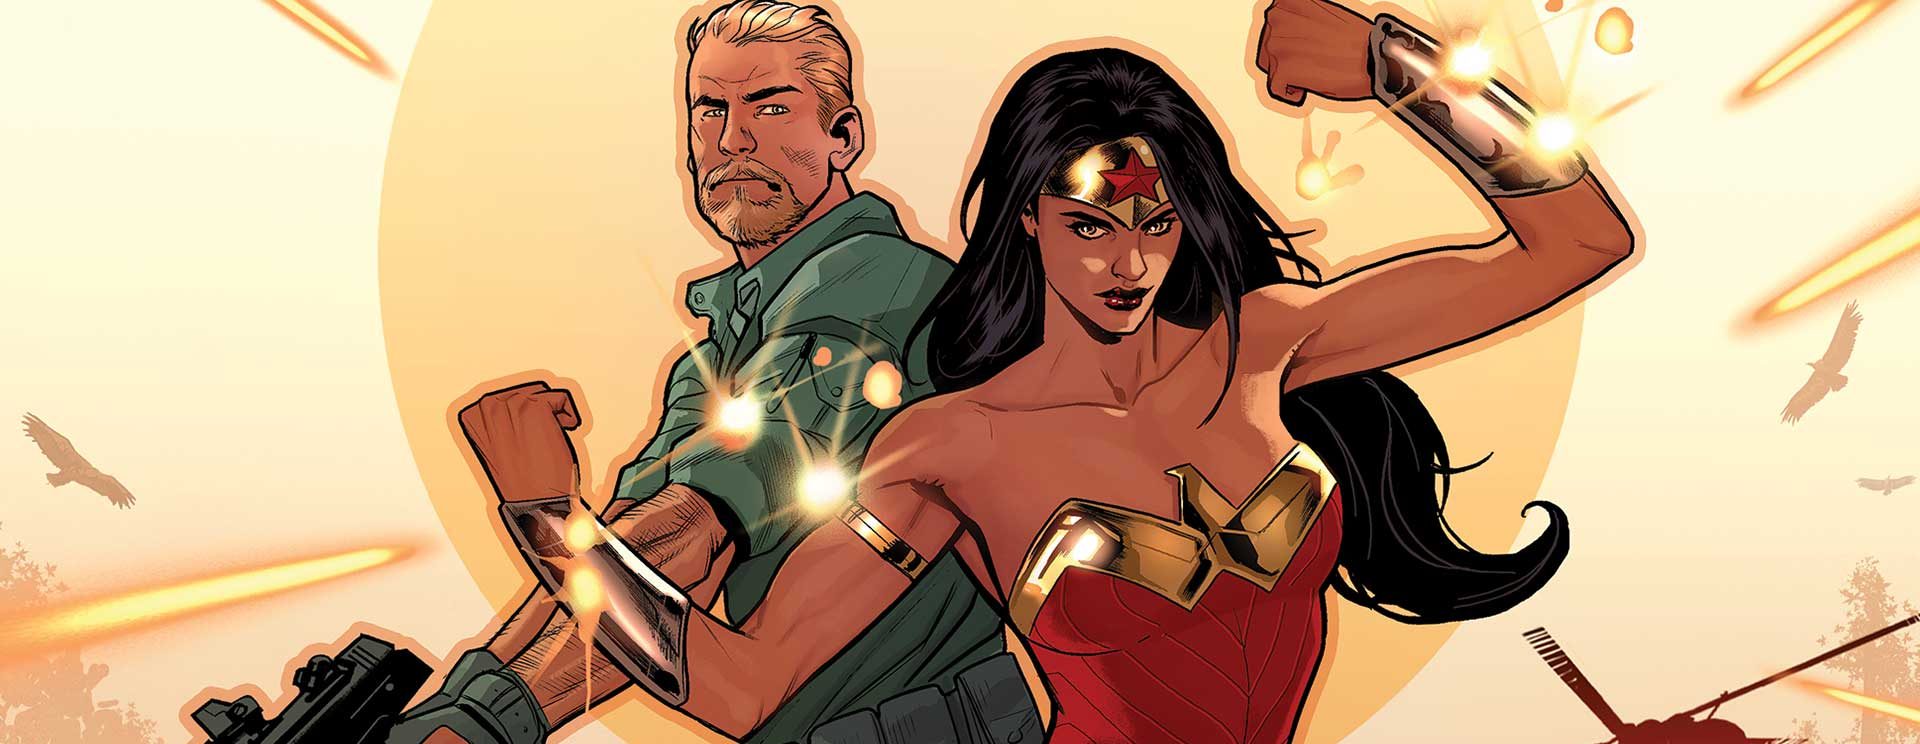 Wonder Woman: Steve Trevor #1 Review